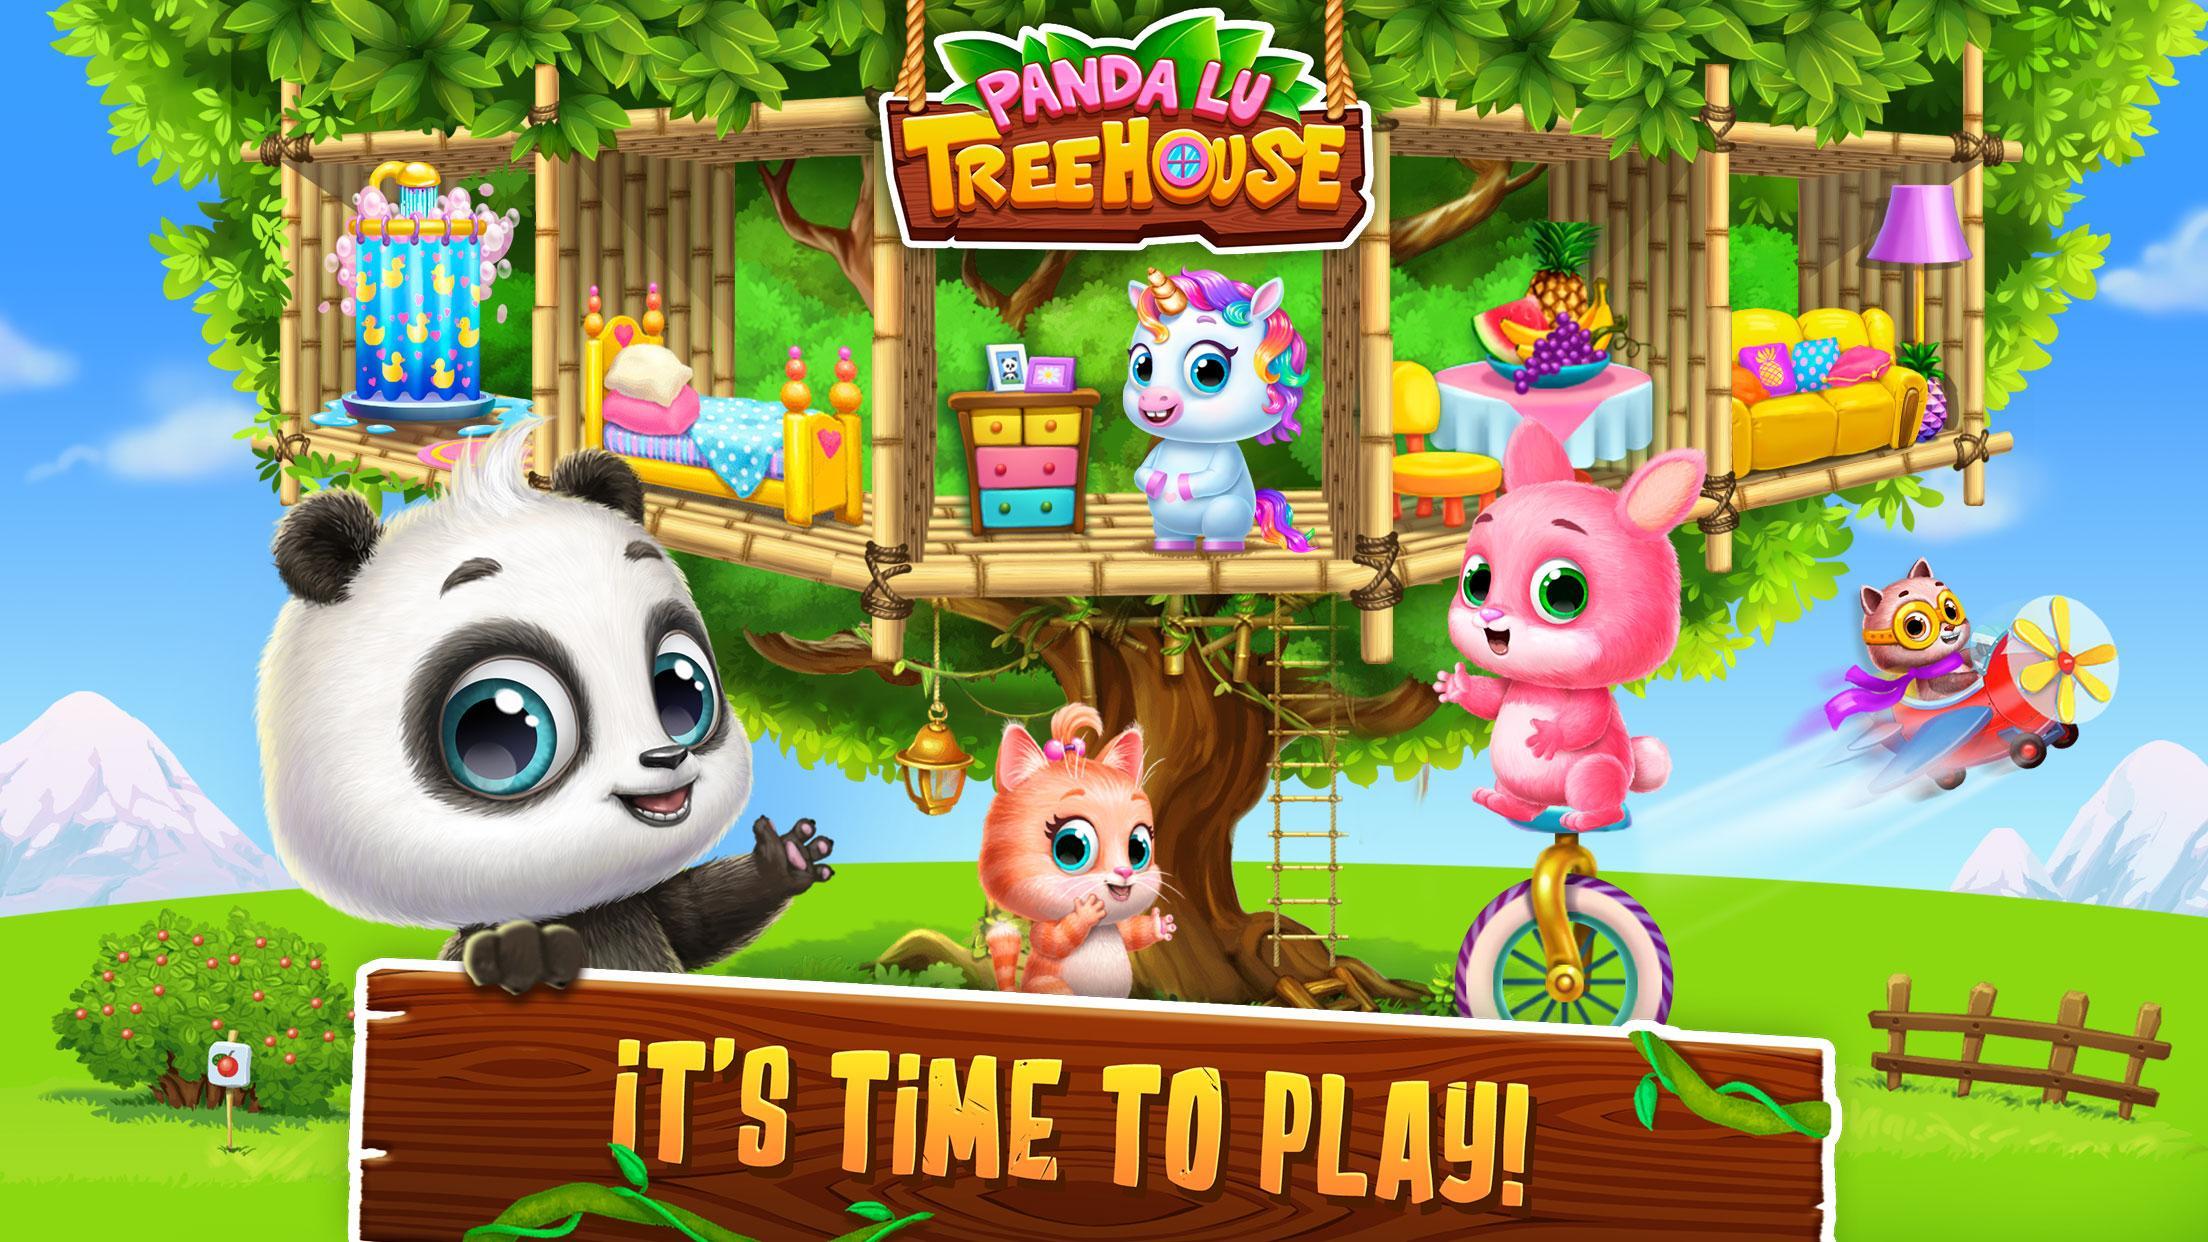 Panda Lu Treehouse - Build & Play with Tiny Pets 1.0.454 Screenshot 3